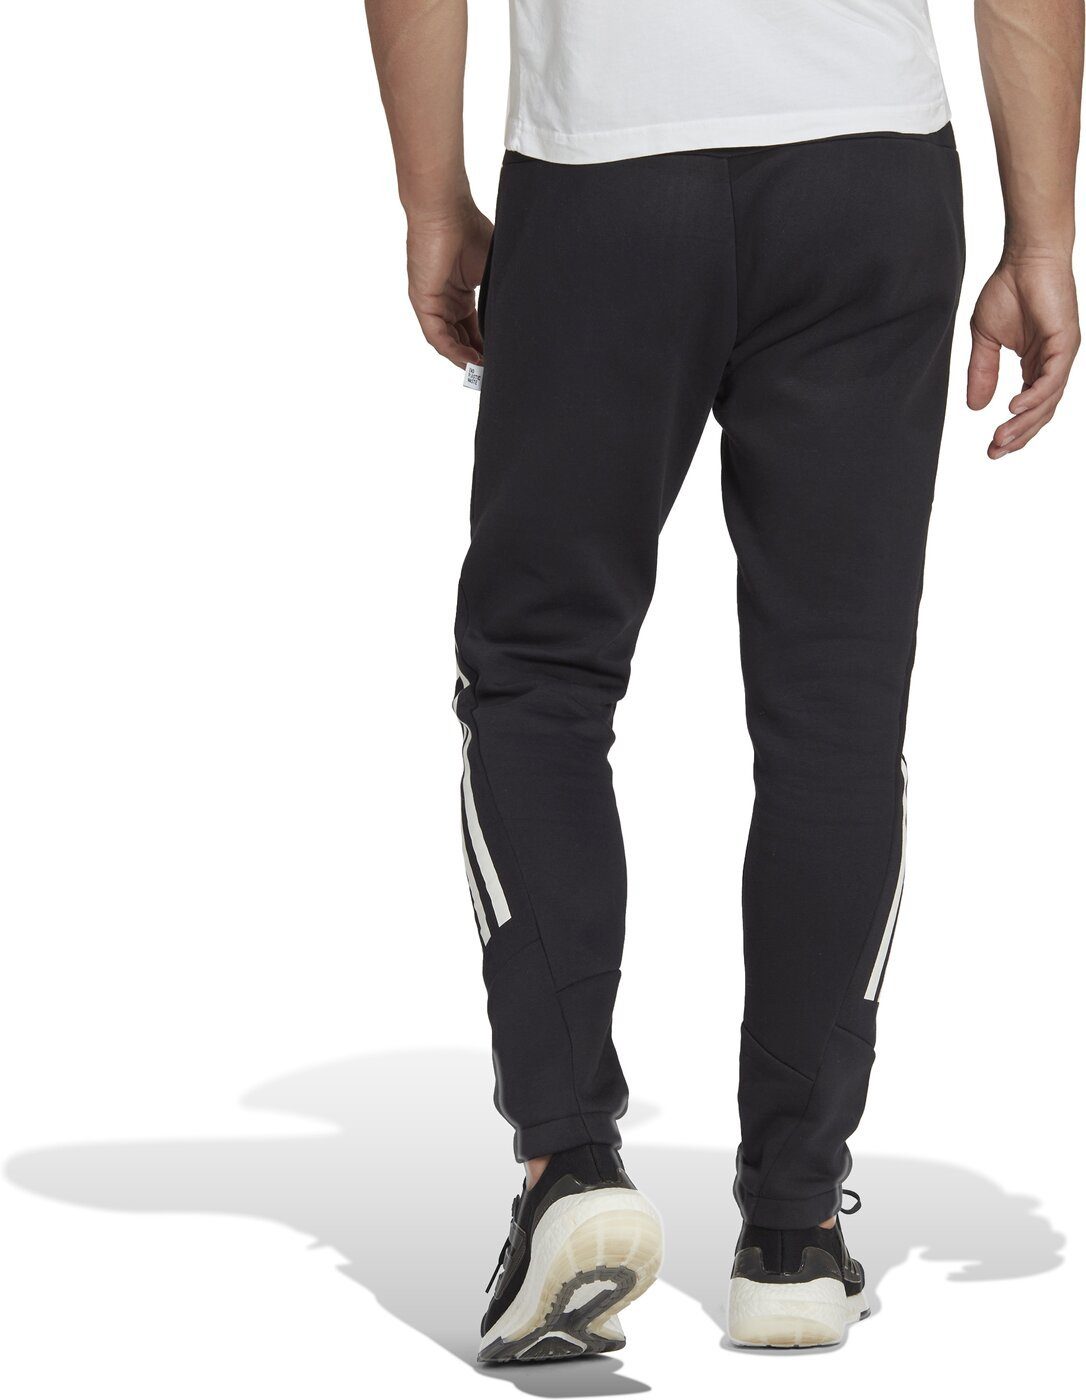 WTR FI BLACK Sportswear M Pant Sporthose adidas